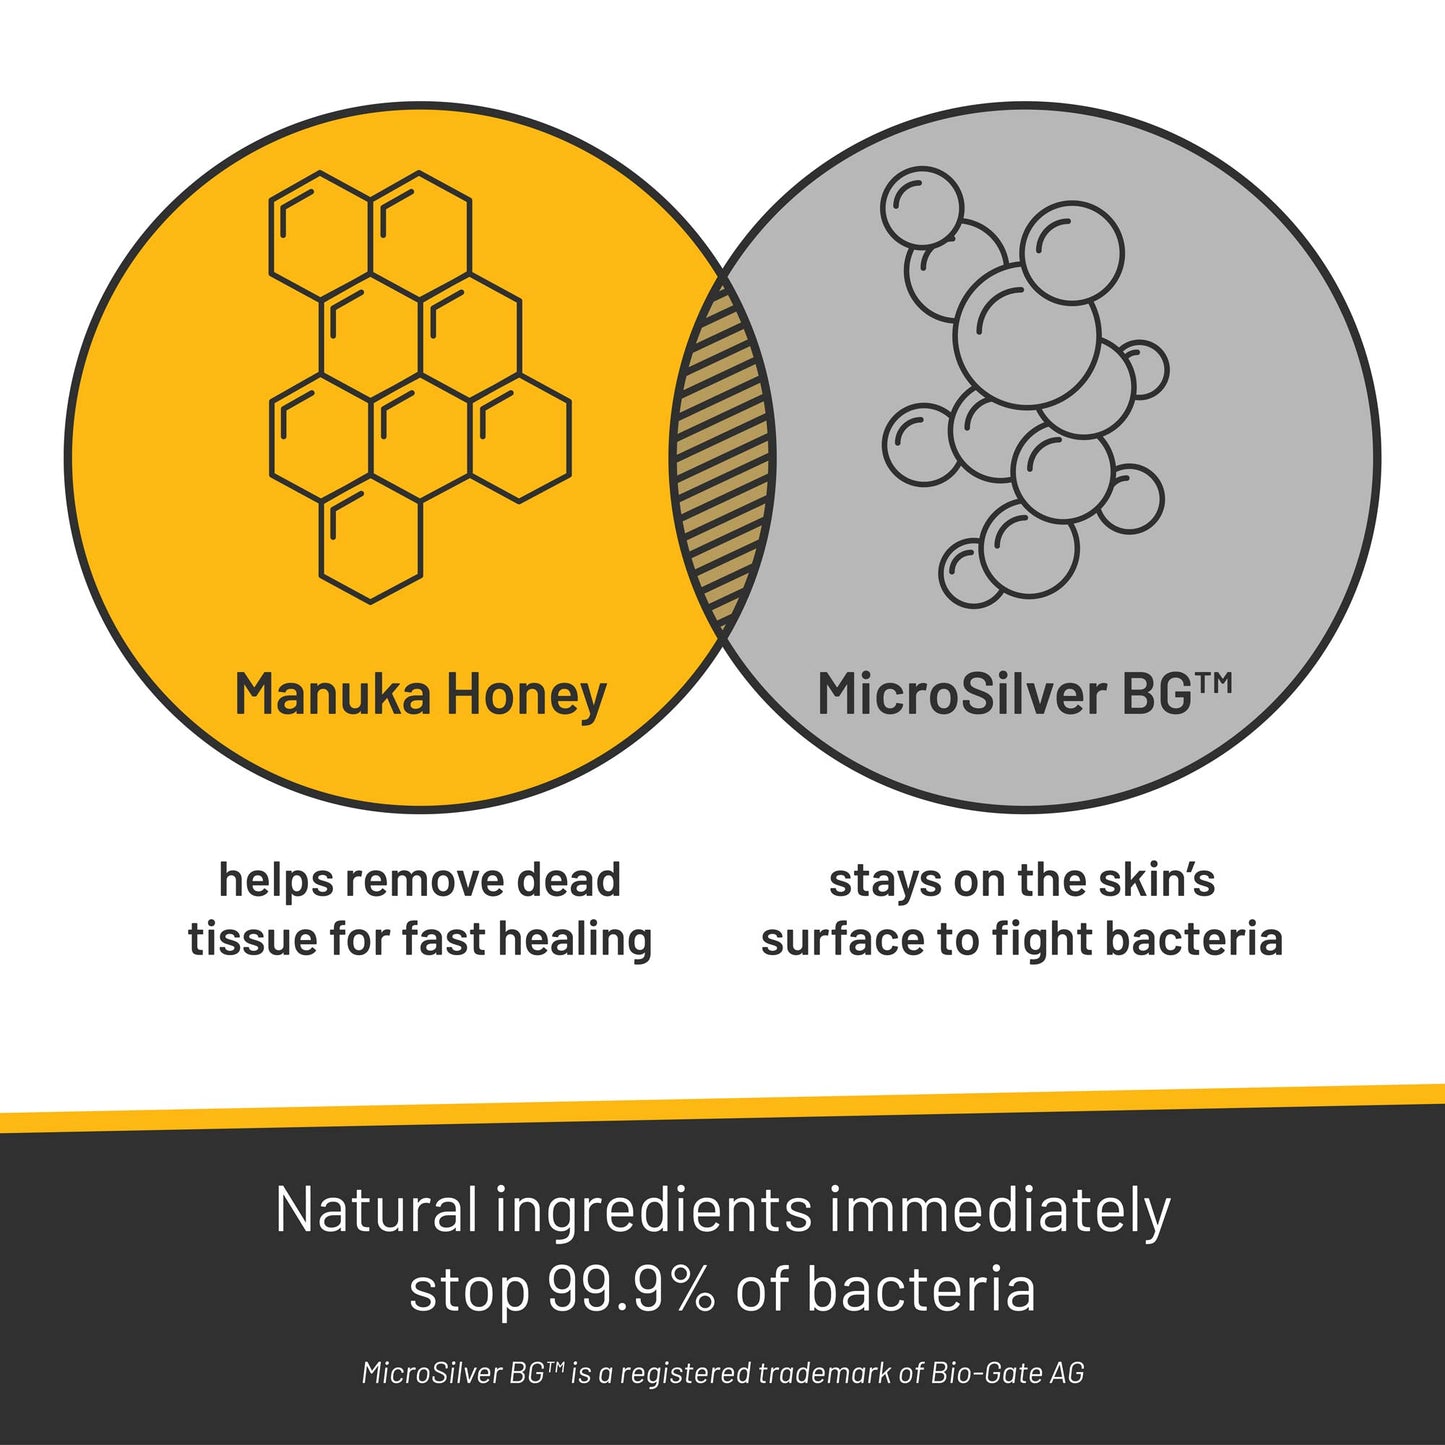 Venn diagram of Manuka Honey and Microsilver BG. Manuka honey helps remove dead tissue for fast healing. Microsilver BG stays on the skin's surface to fight bacteria